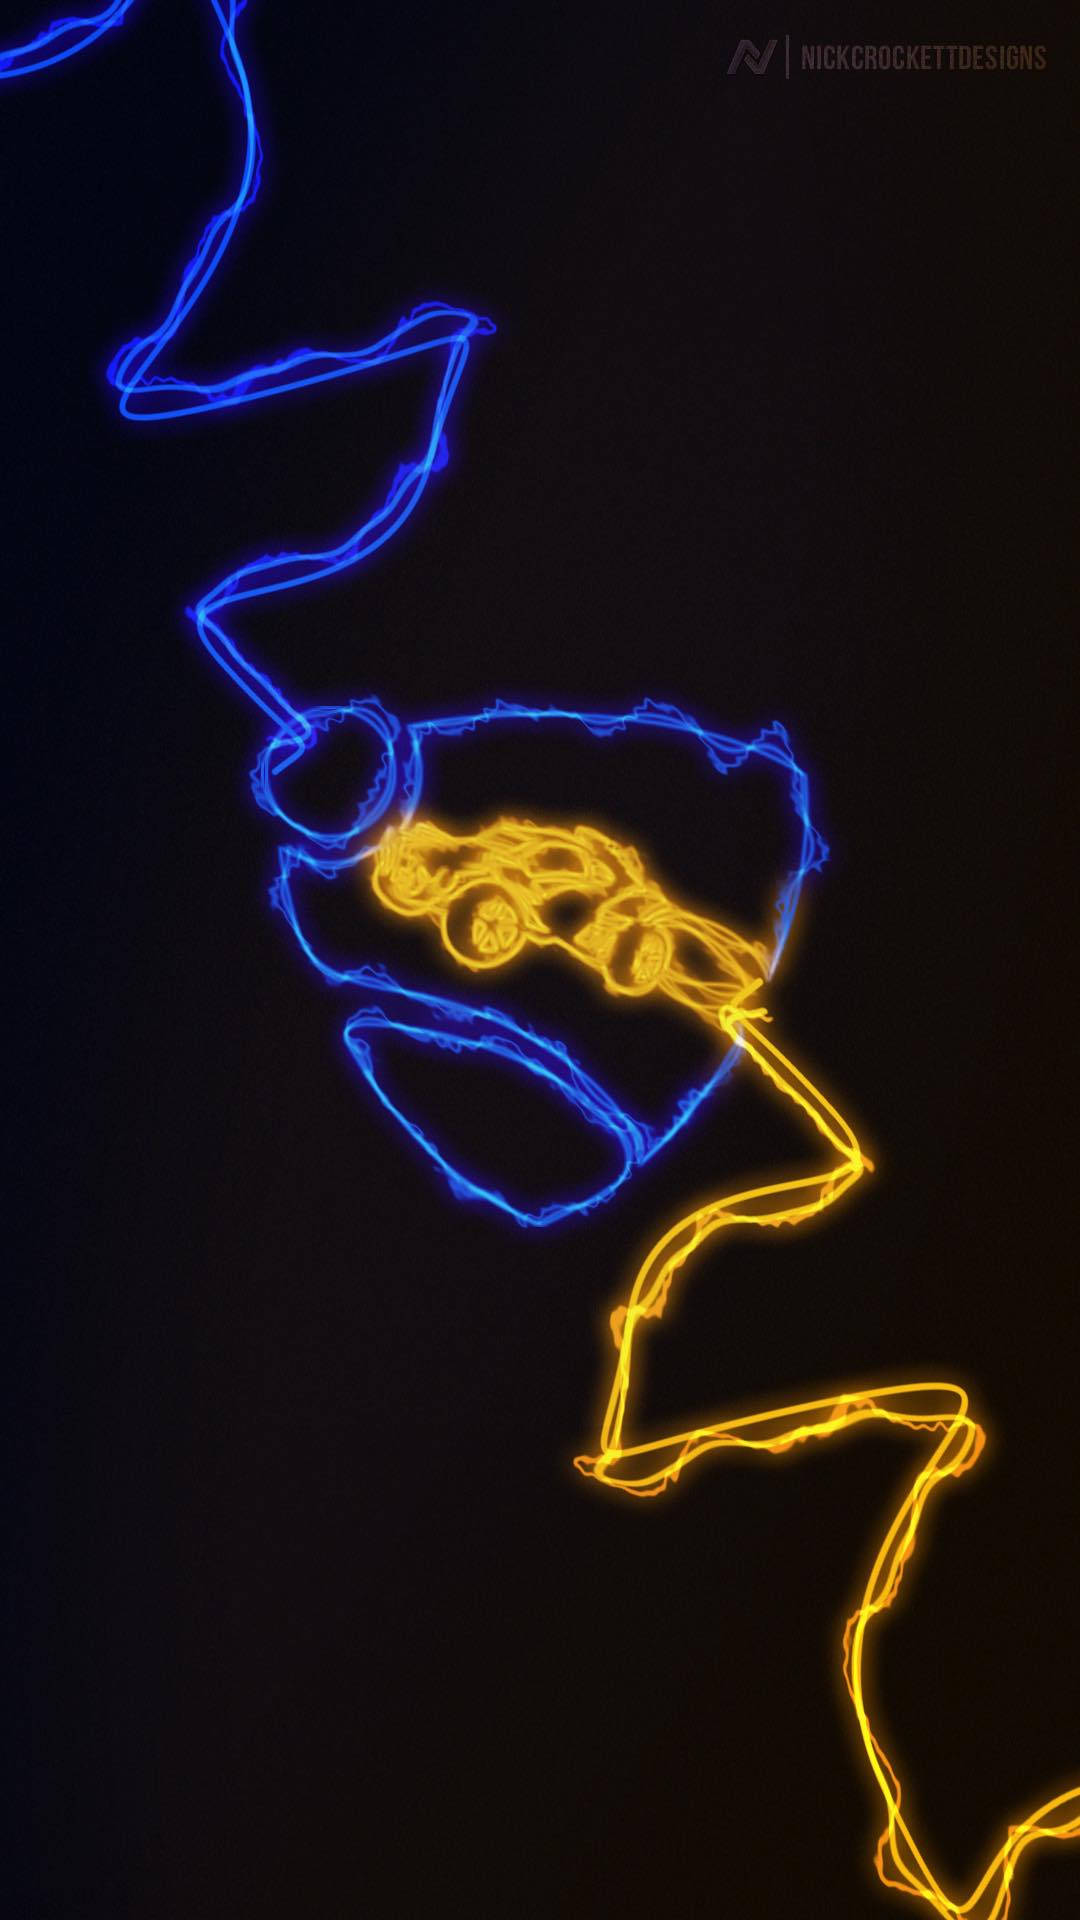 Neon Yellow Car Rocket League Iphone Wallpaper